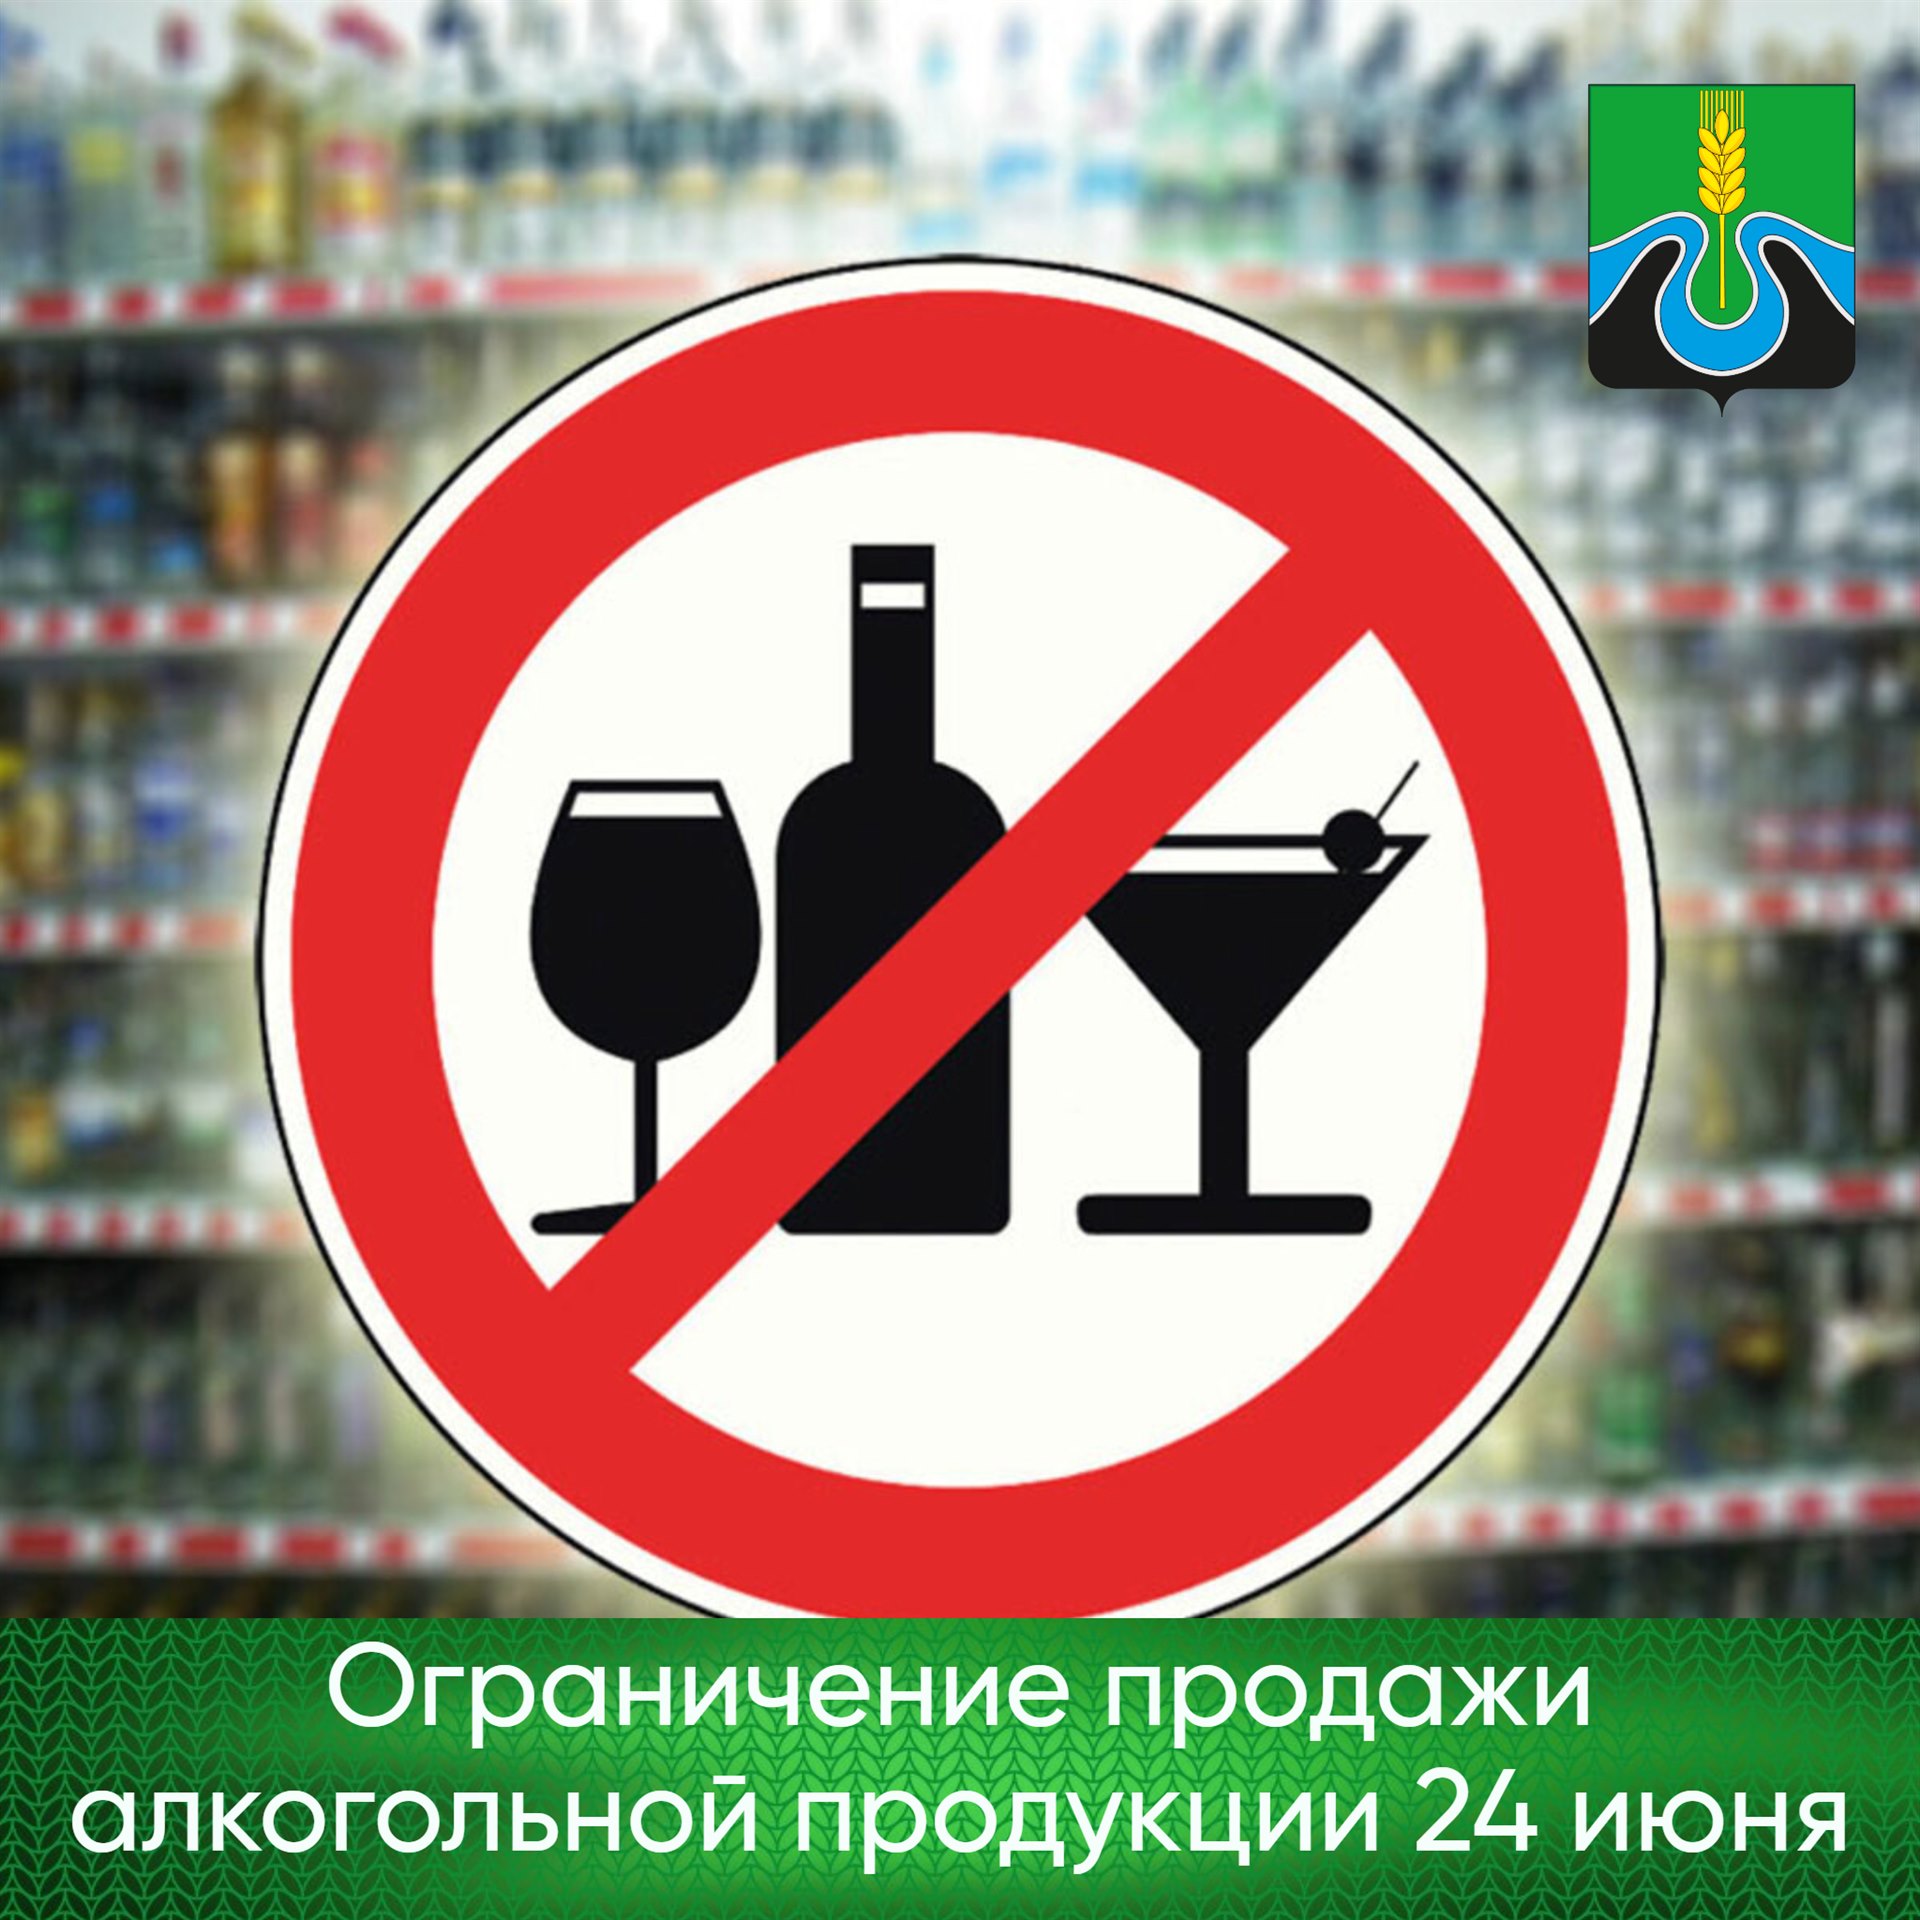 Реализация запрещена ограничена. Торговля алкоголем запрещена. Ограничинить алкоголь. Реализация алкогольной продукции запрещена.